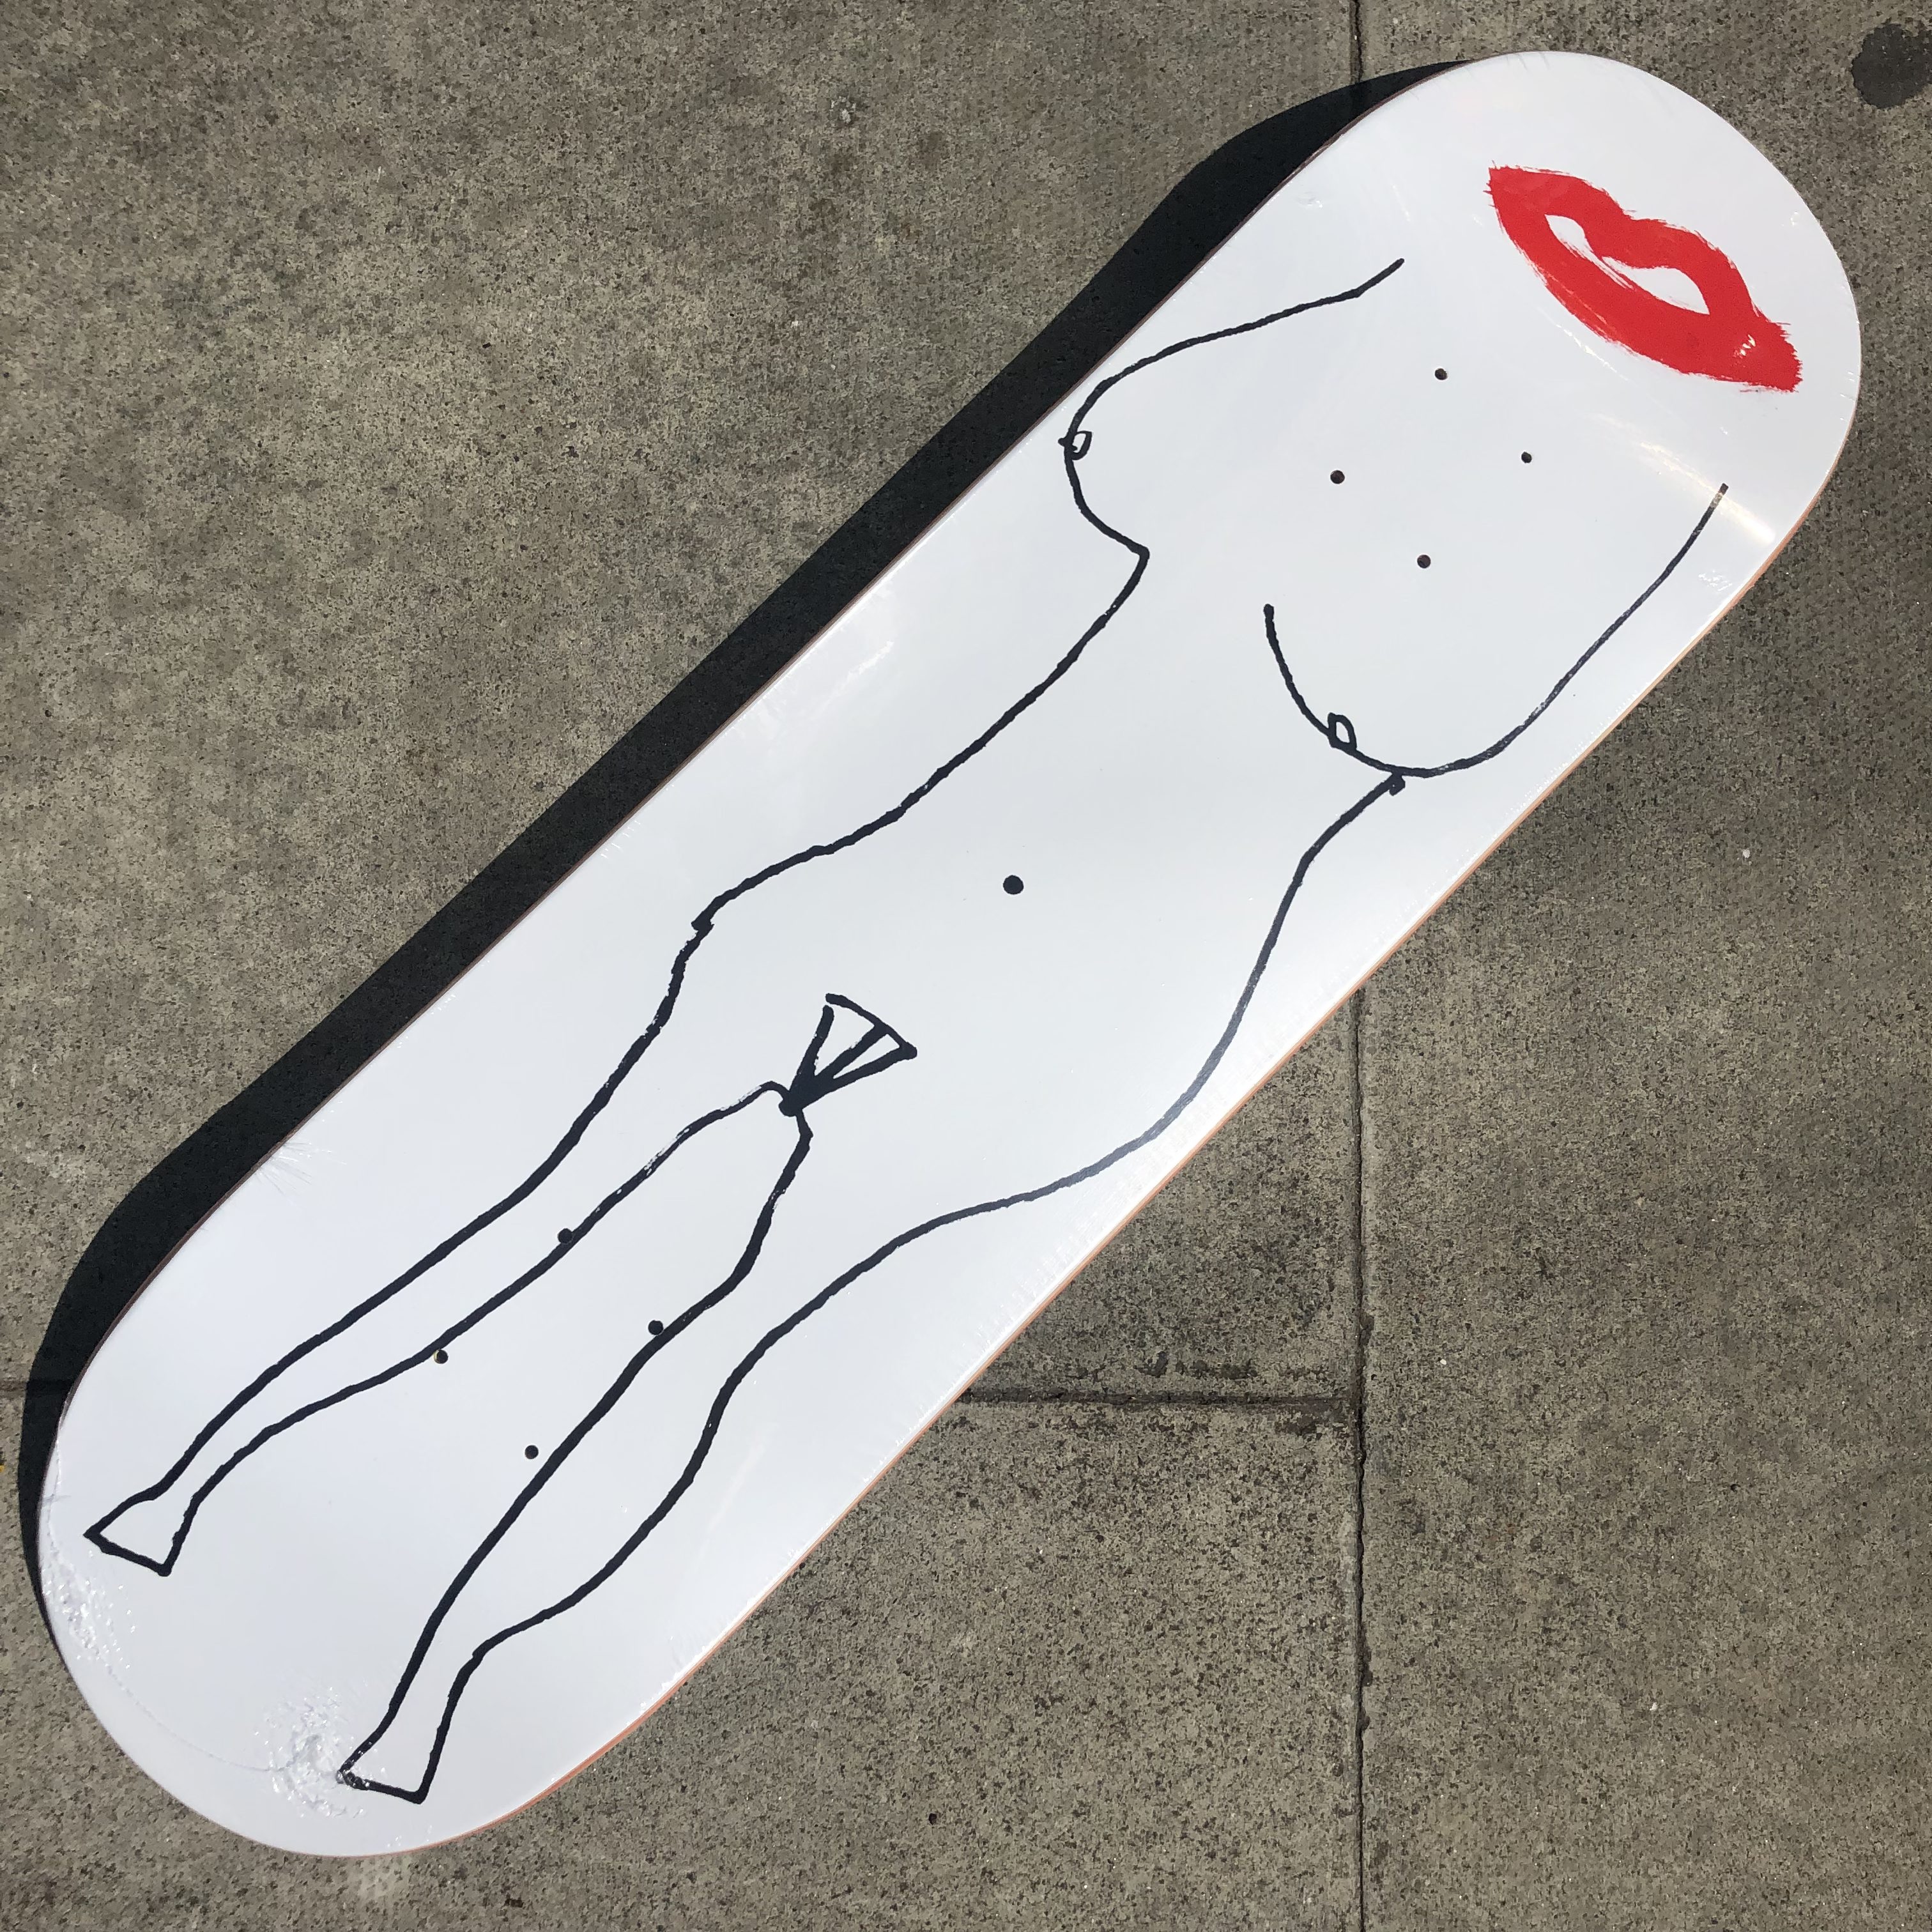 cristian popovici recommends sex on a skateboard pic